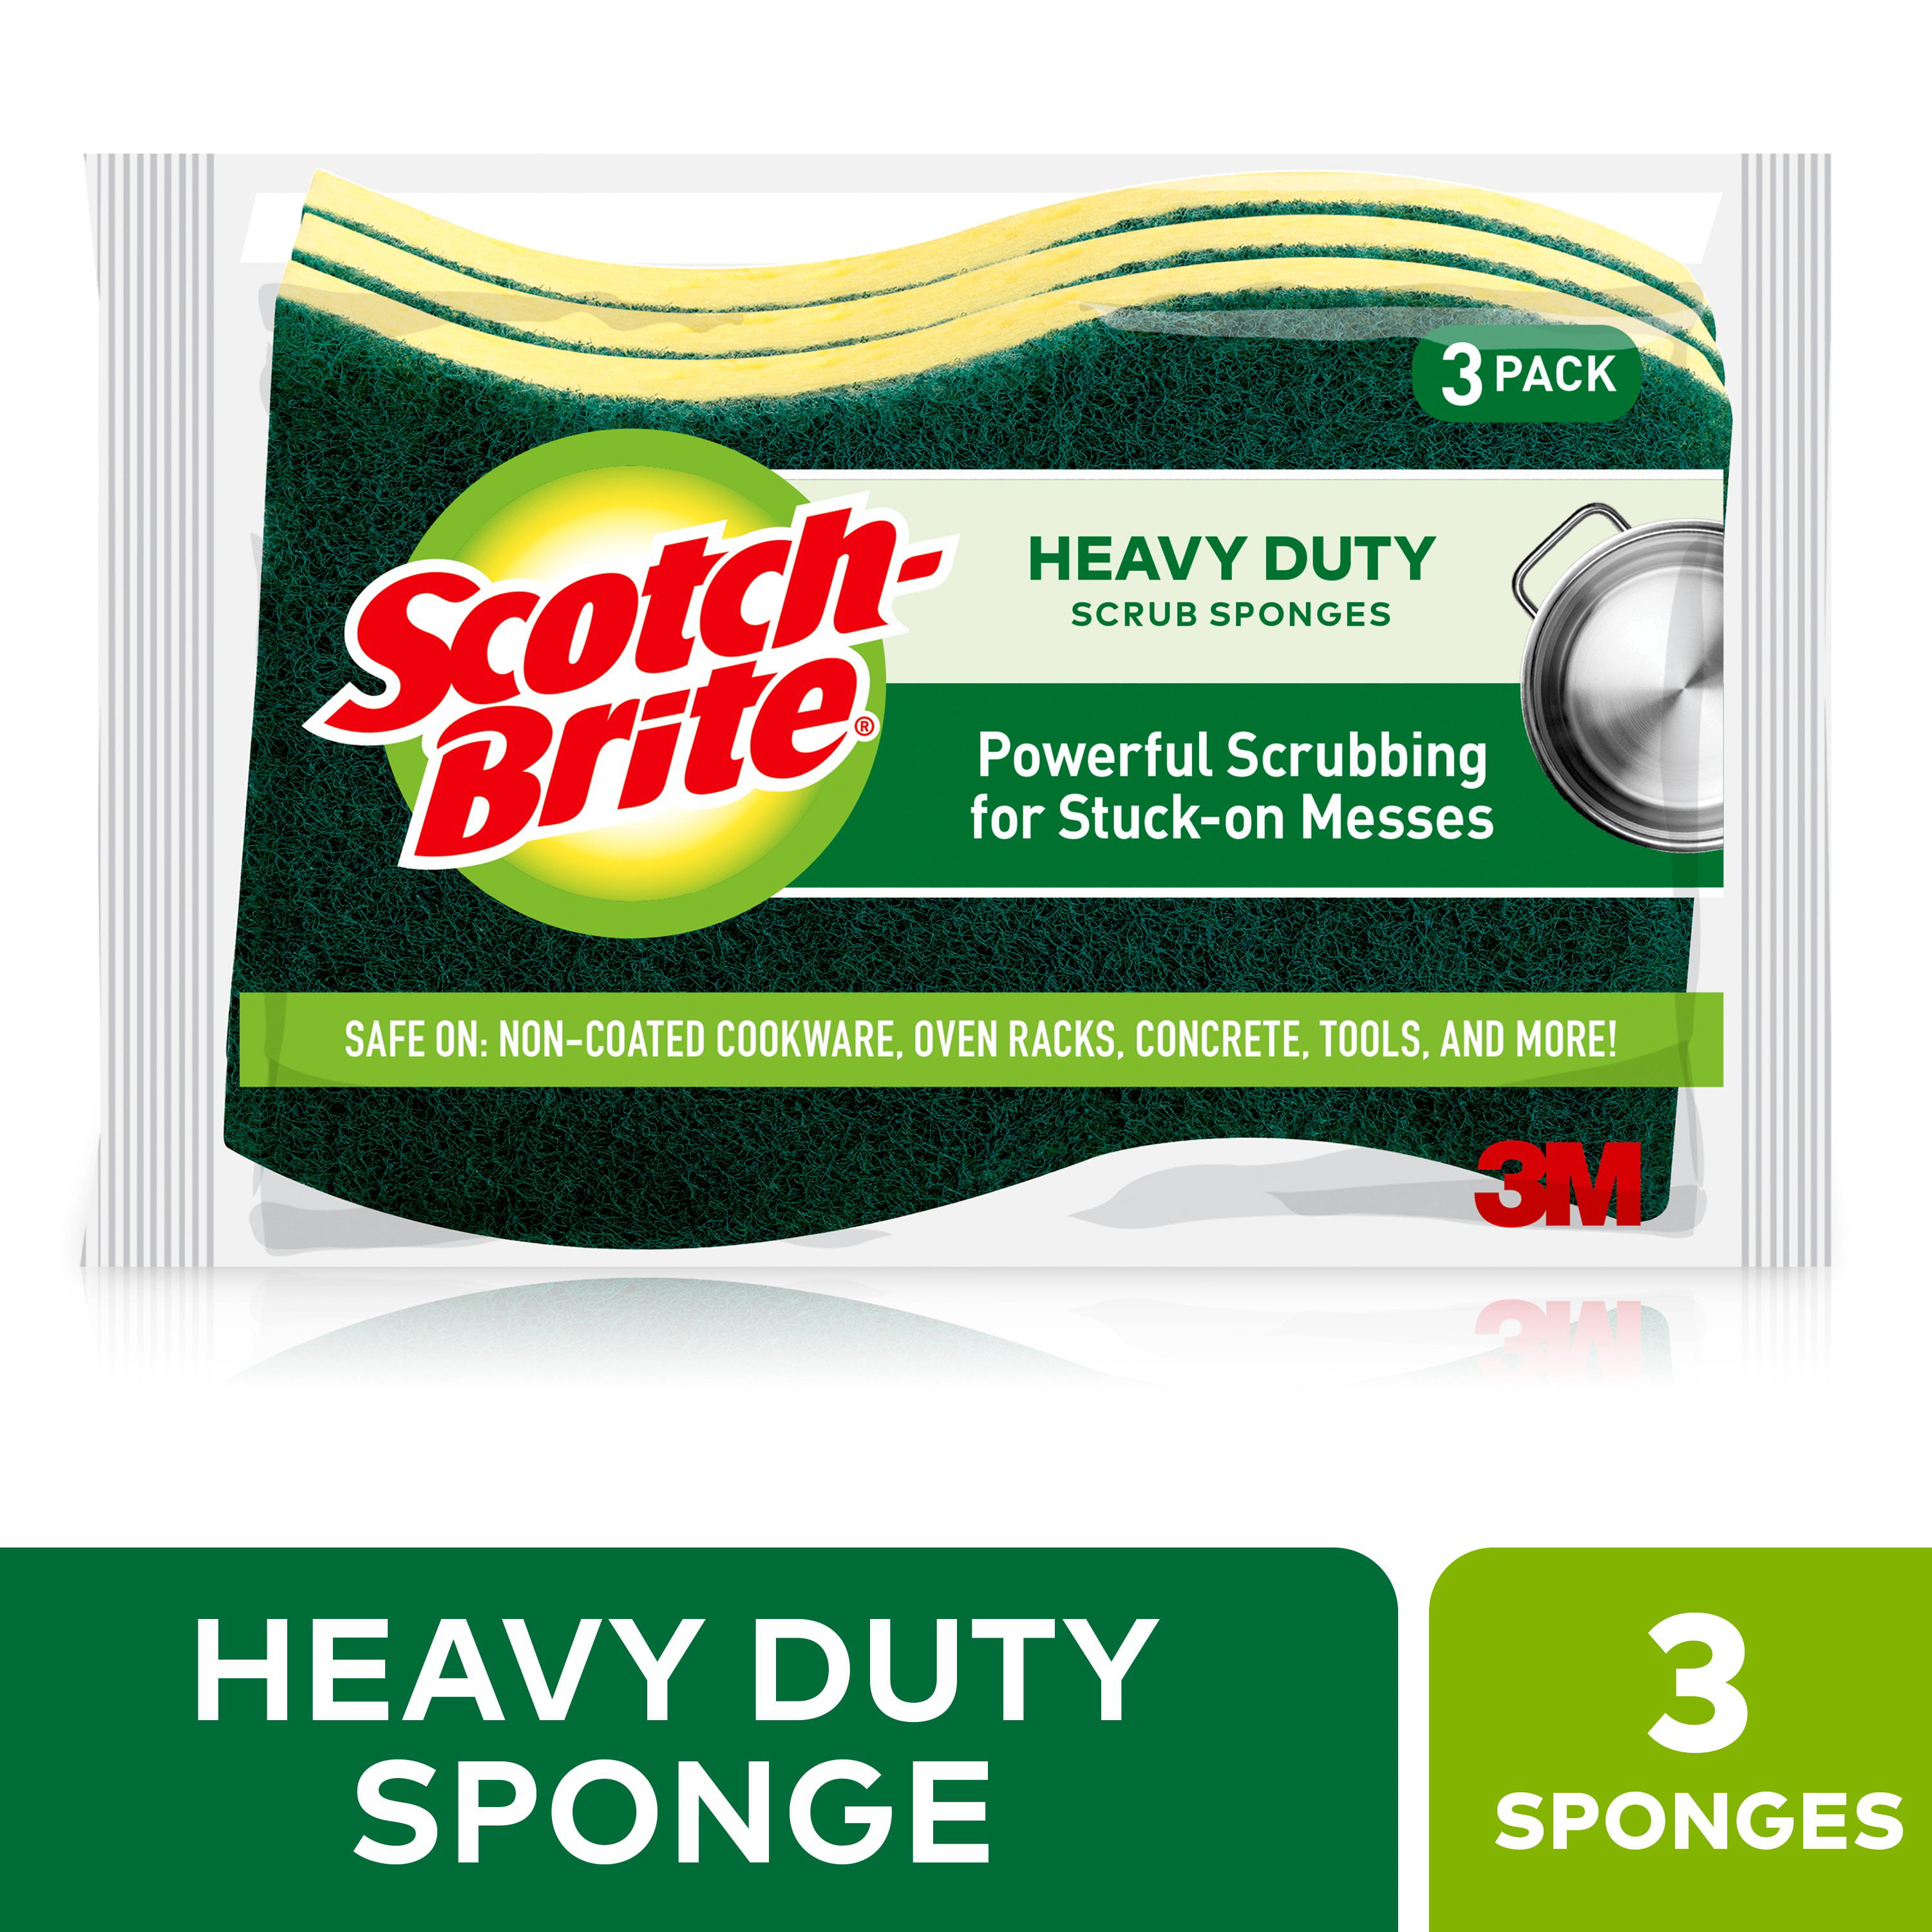 Scotch-Brite Heavy Duty Scrub Sponge Powerful Scrubbing for Stuck-on Messes 6 Scrub Sponges